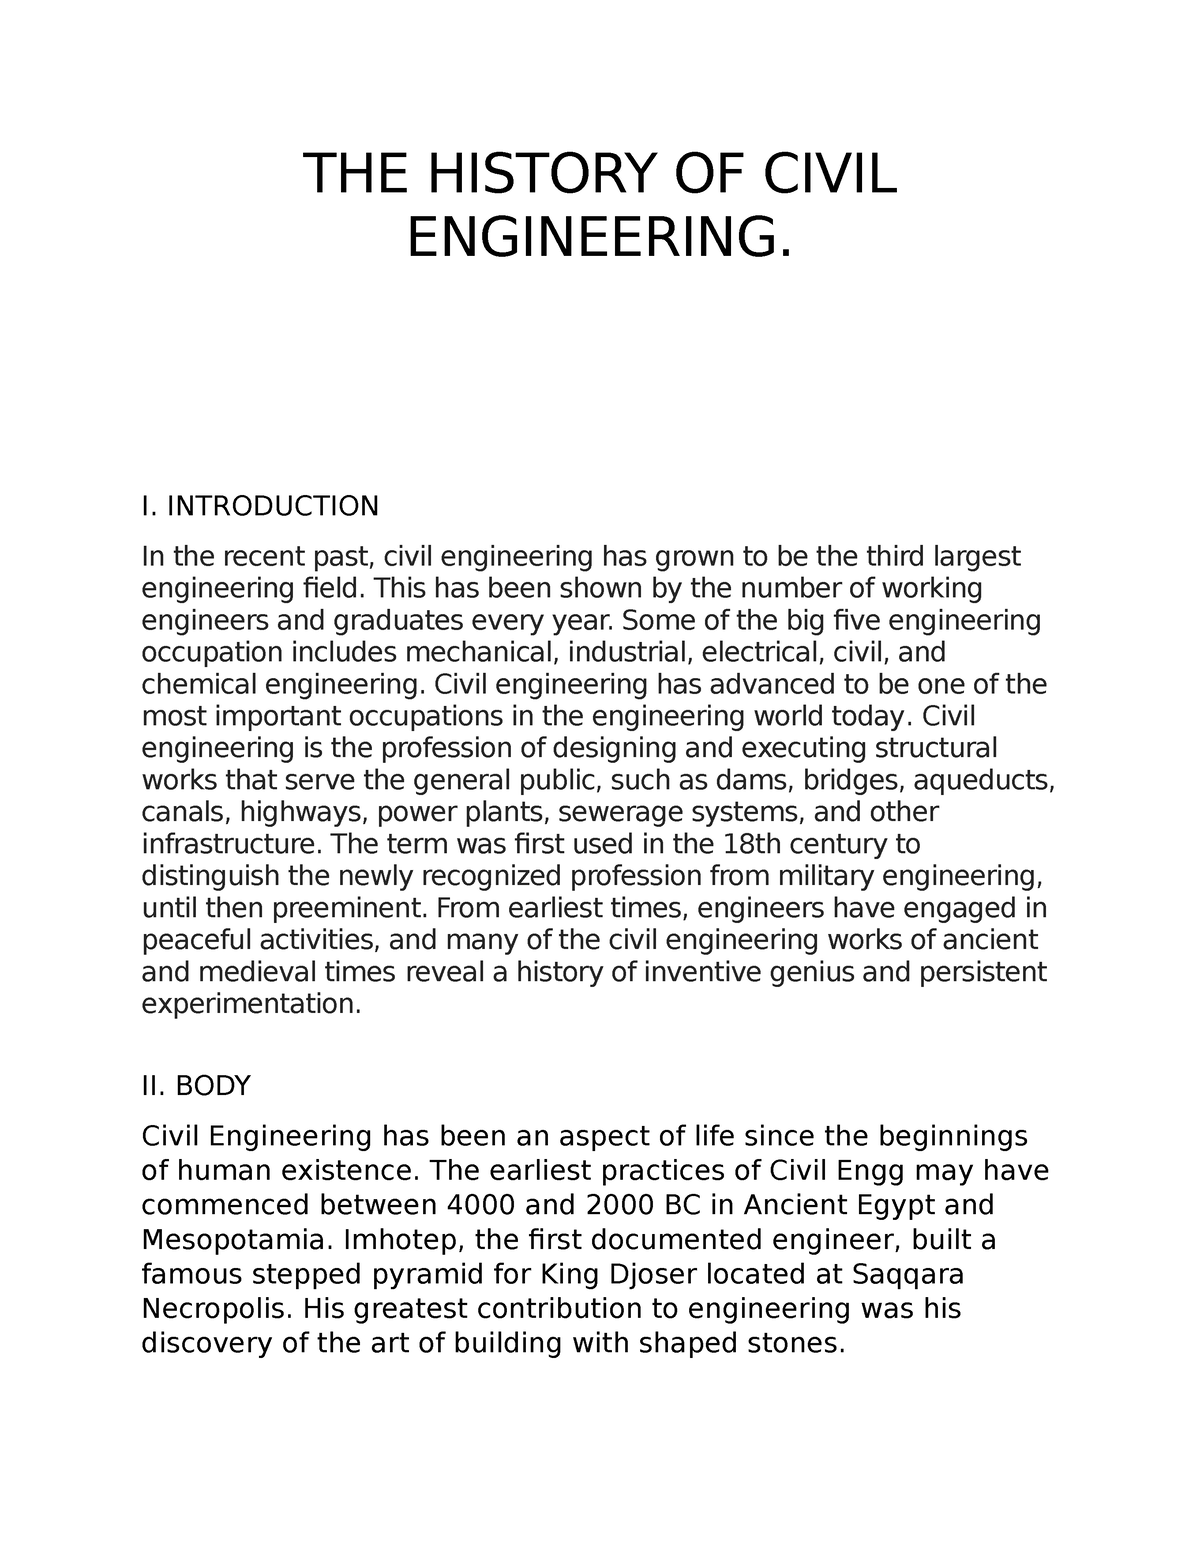 the history of engineering essay